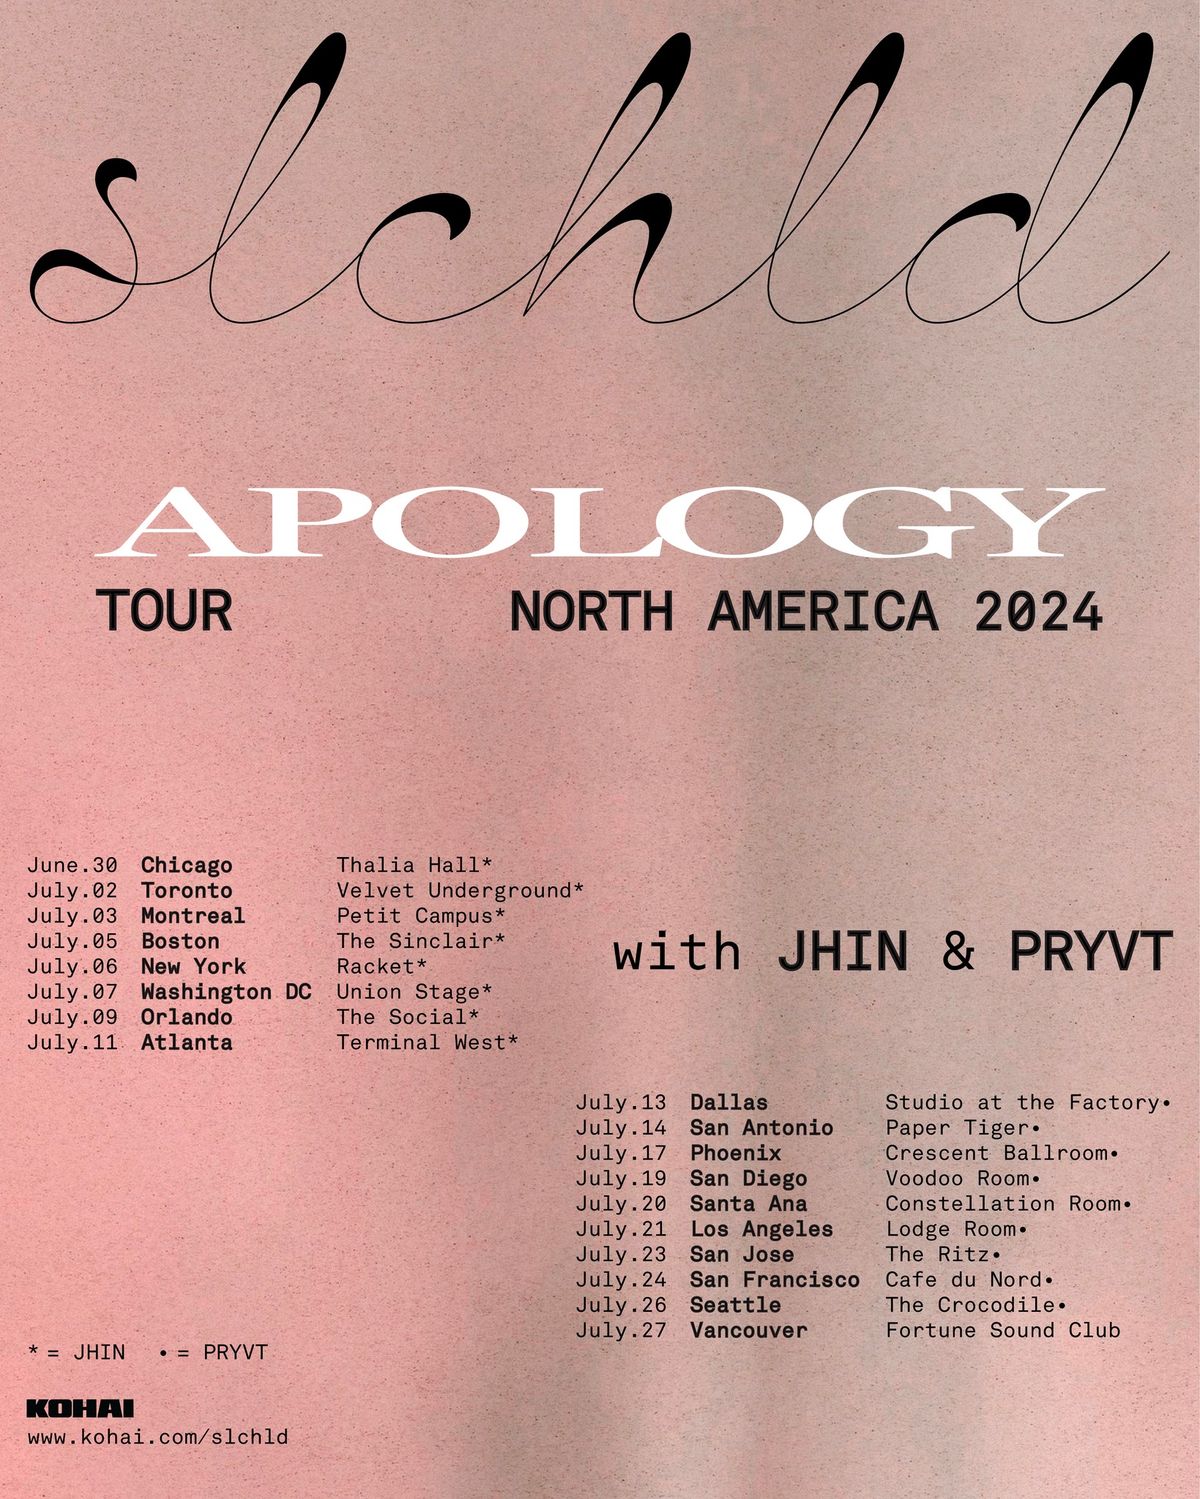 slchld 'Apology' North America Tour - Phoenix - July 17 at Crescent Ballroom